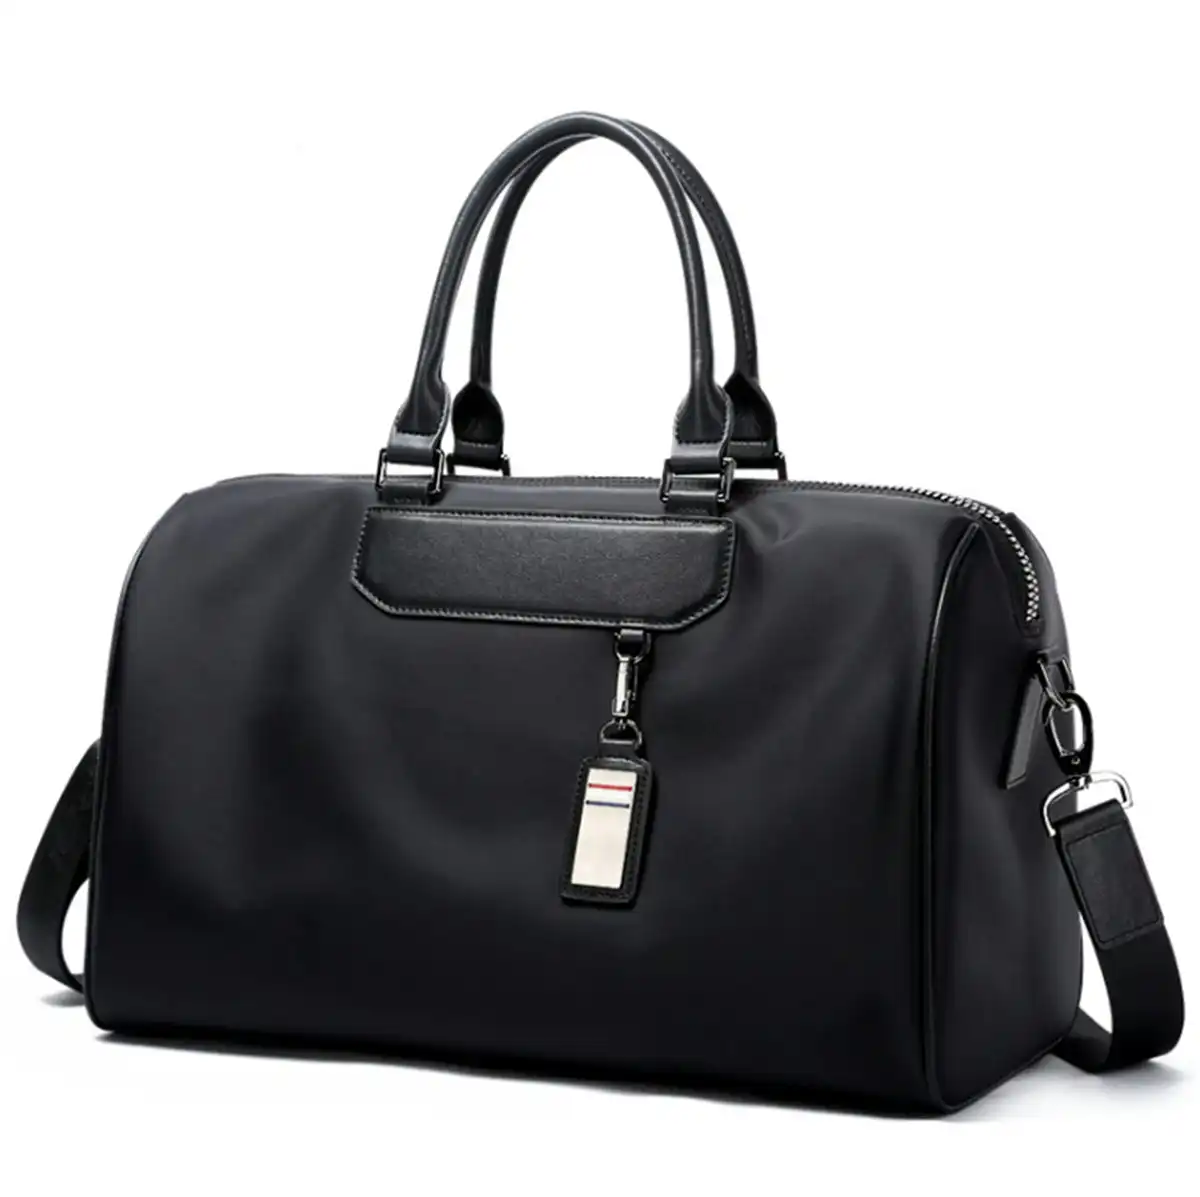 Bopai Luxury Waterproof Foldable Cross-body Travel Gym Sport Duffle Bag Luggage Hand Bag B3021 Black